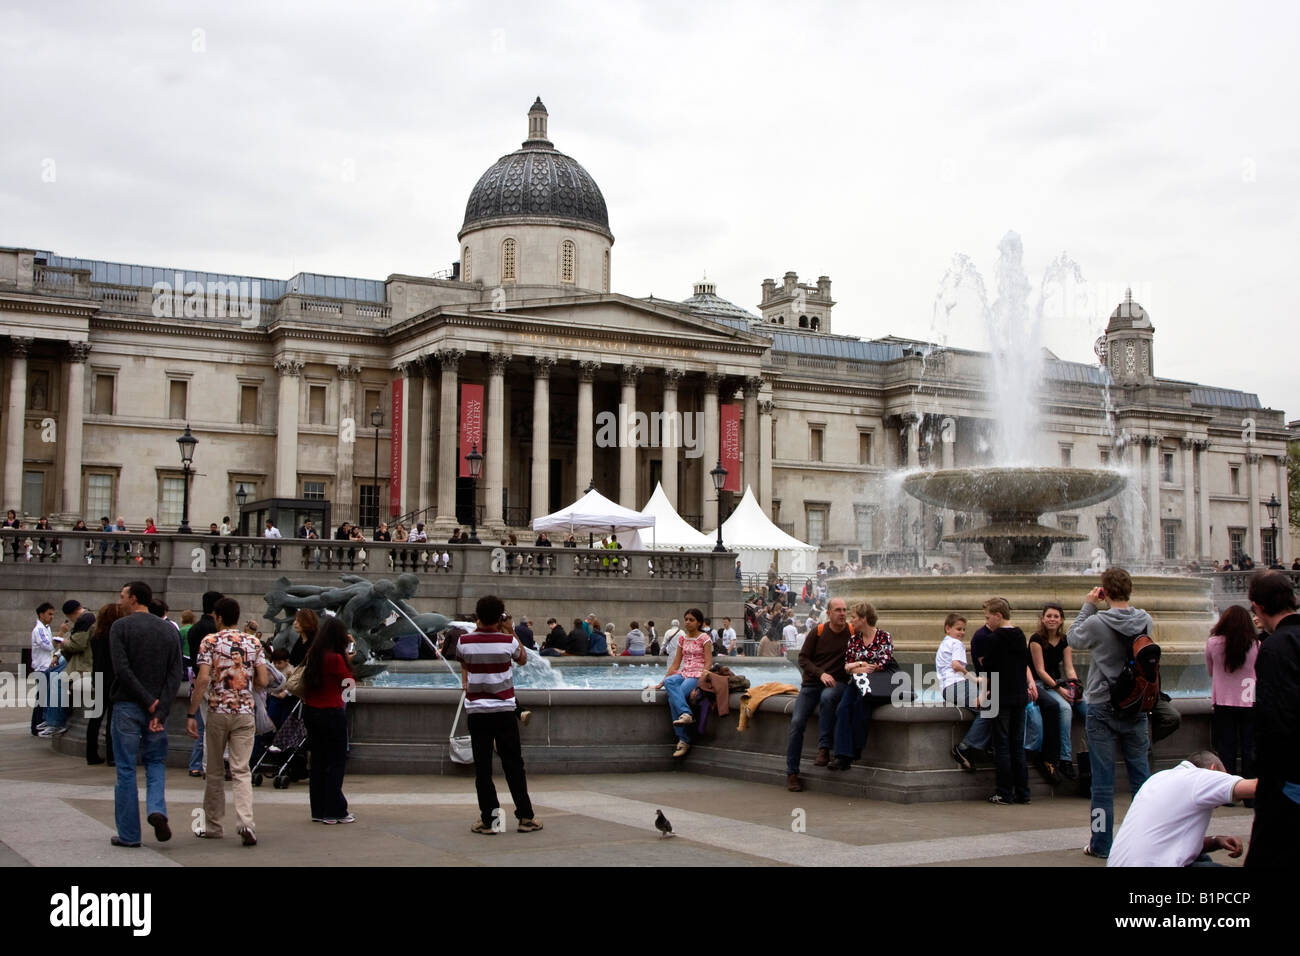 National Portrait Gallery from Trafalgar Square, London England Stock Photo